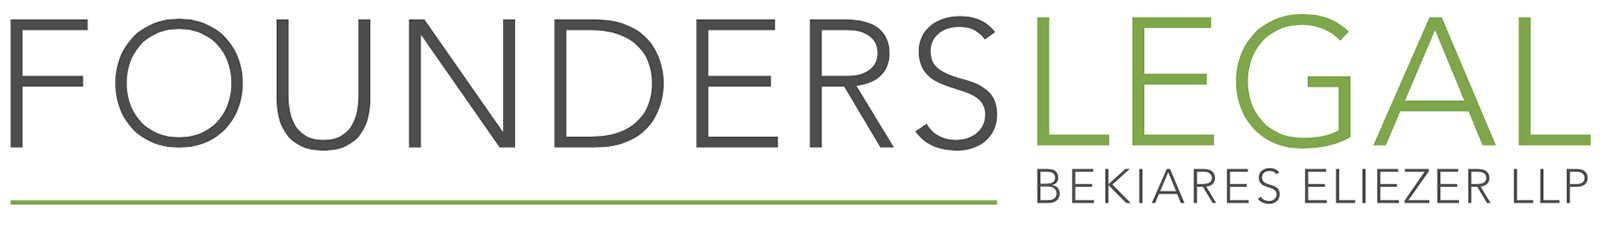 Founders Legal Logo